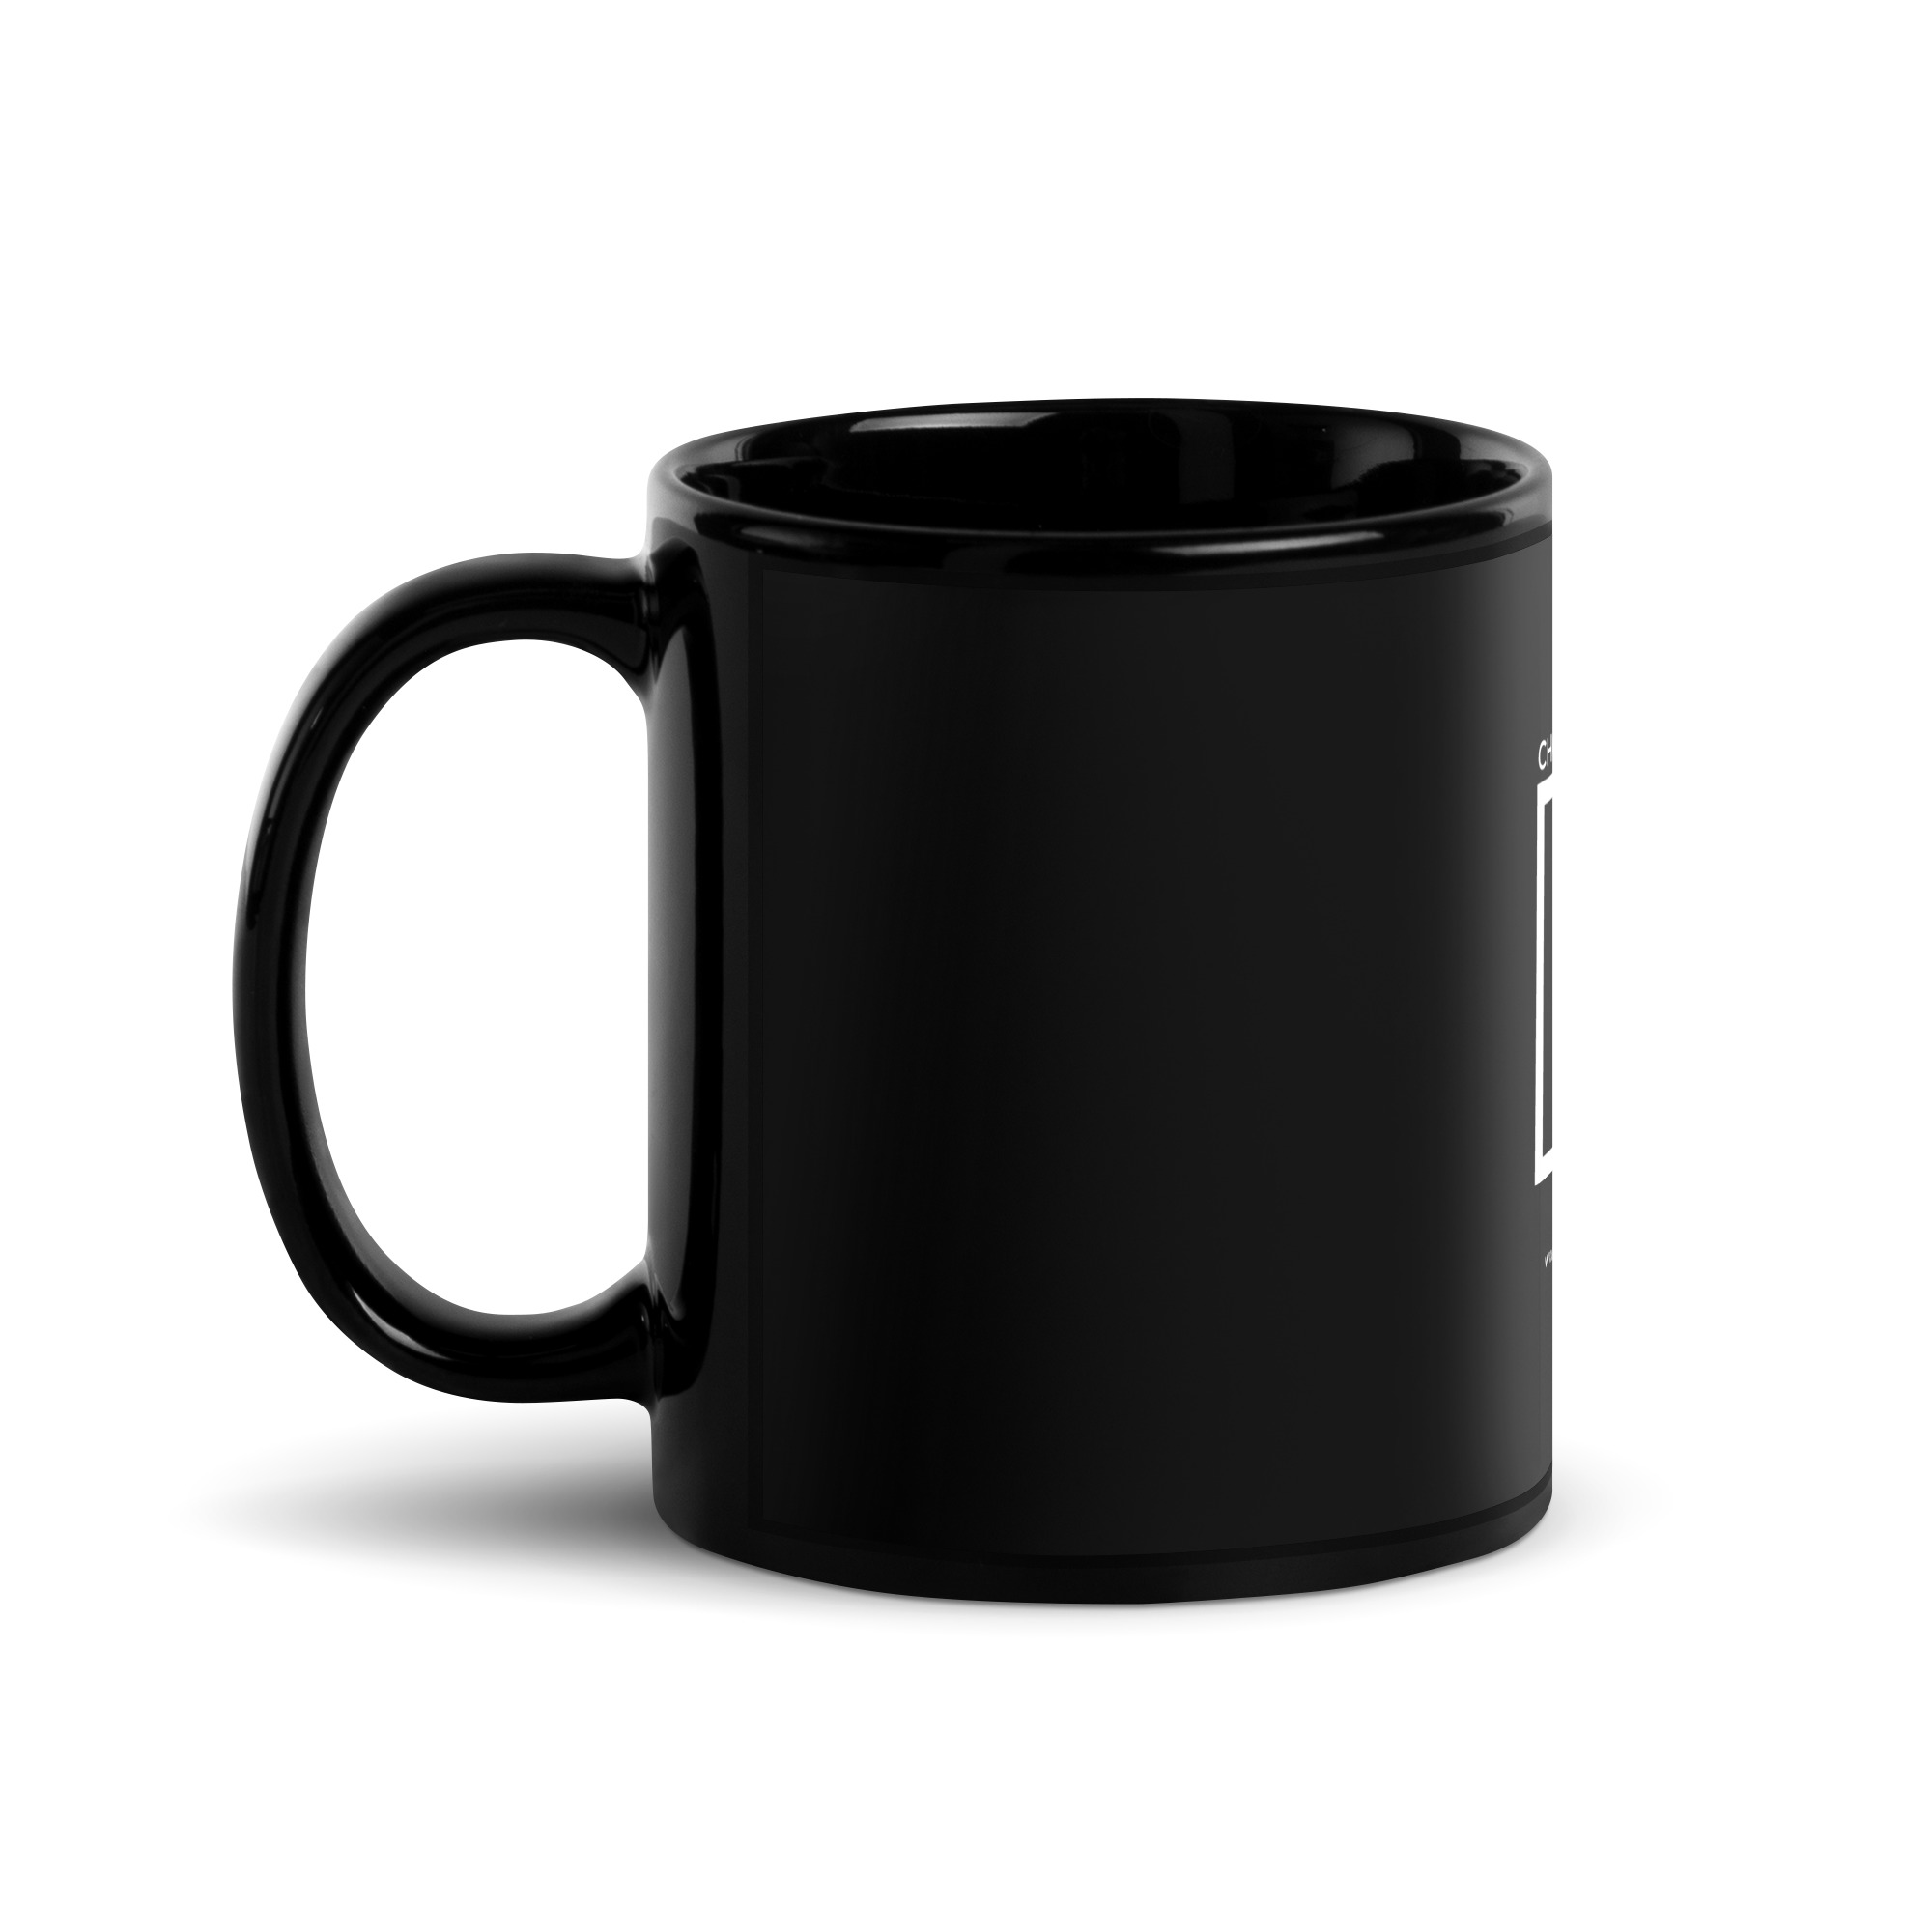 black-glossy-mug-black-11-oz-handle-on-left-6522a11d9db76.jpg